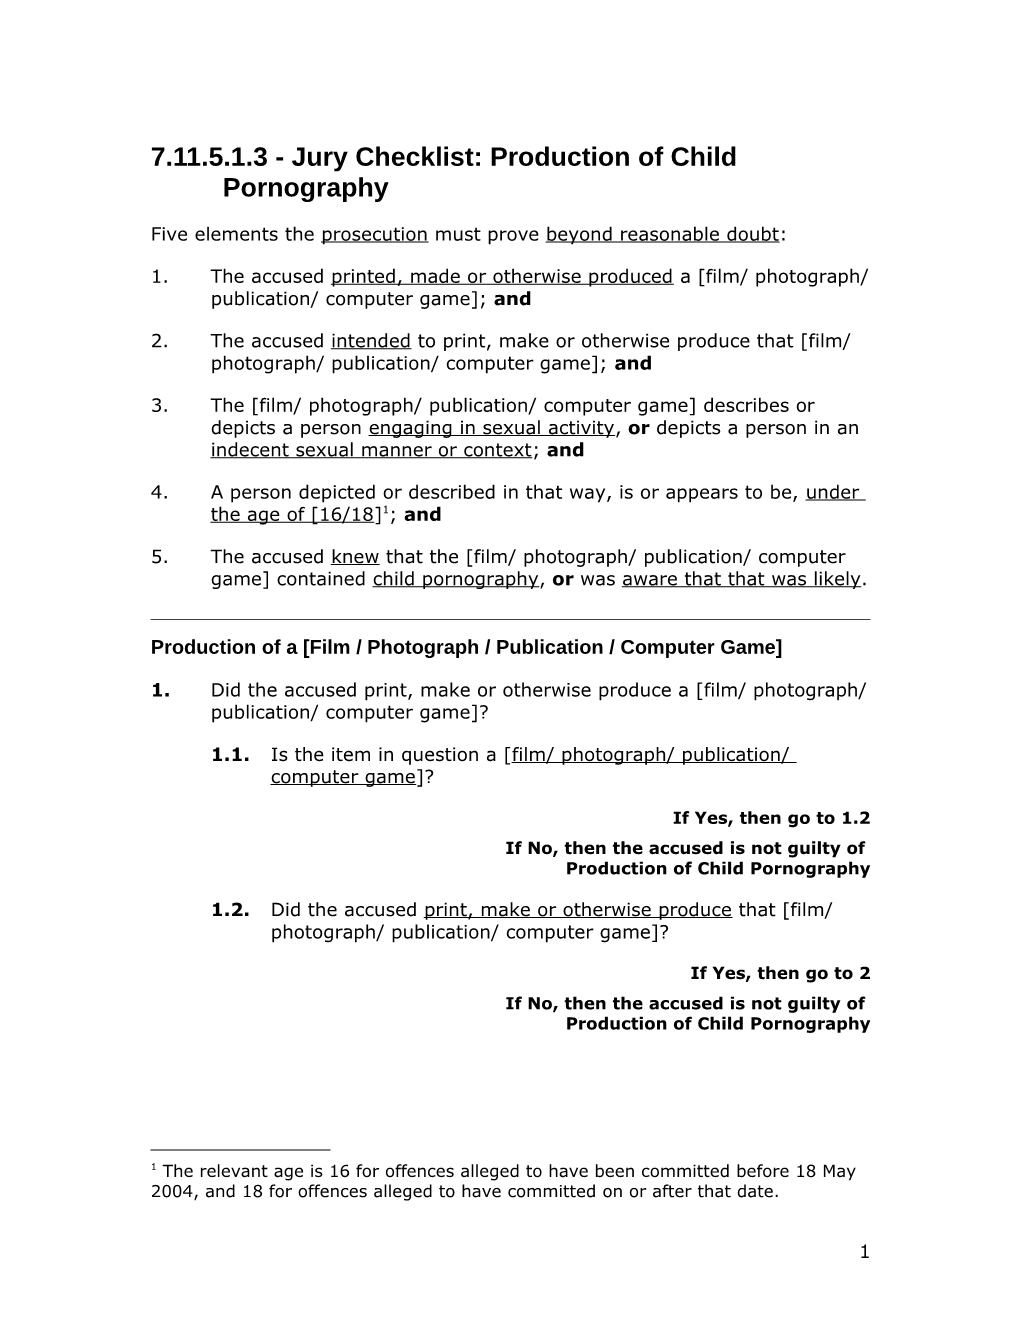 7.11.5.1.3 - Jury Checklist: Production of Child Pornography